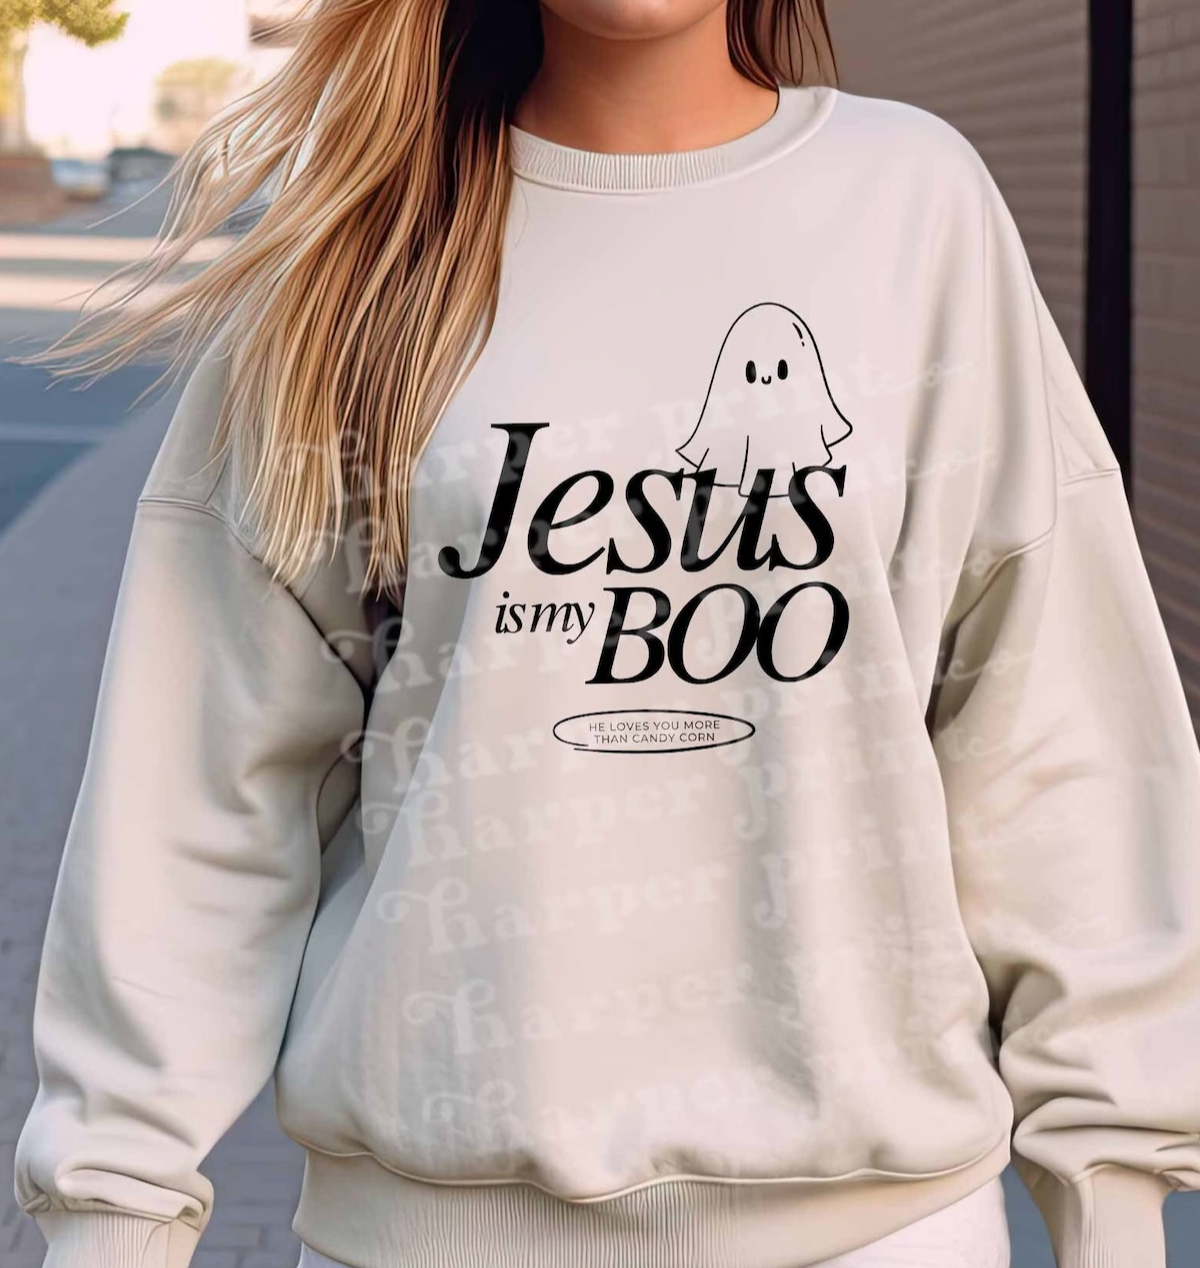 Jesus is my boo